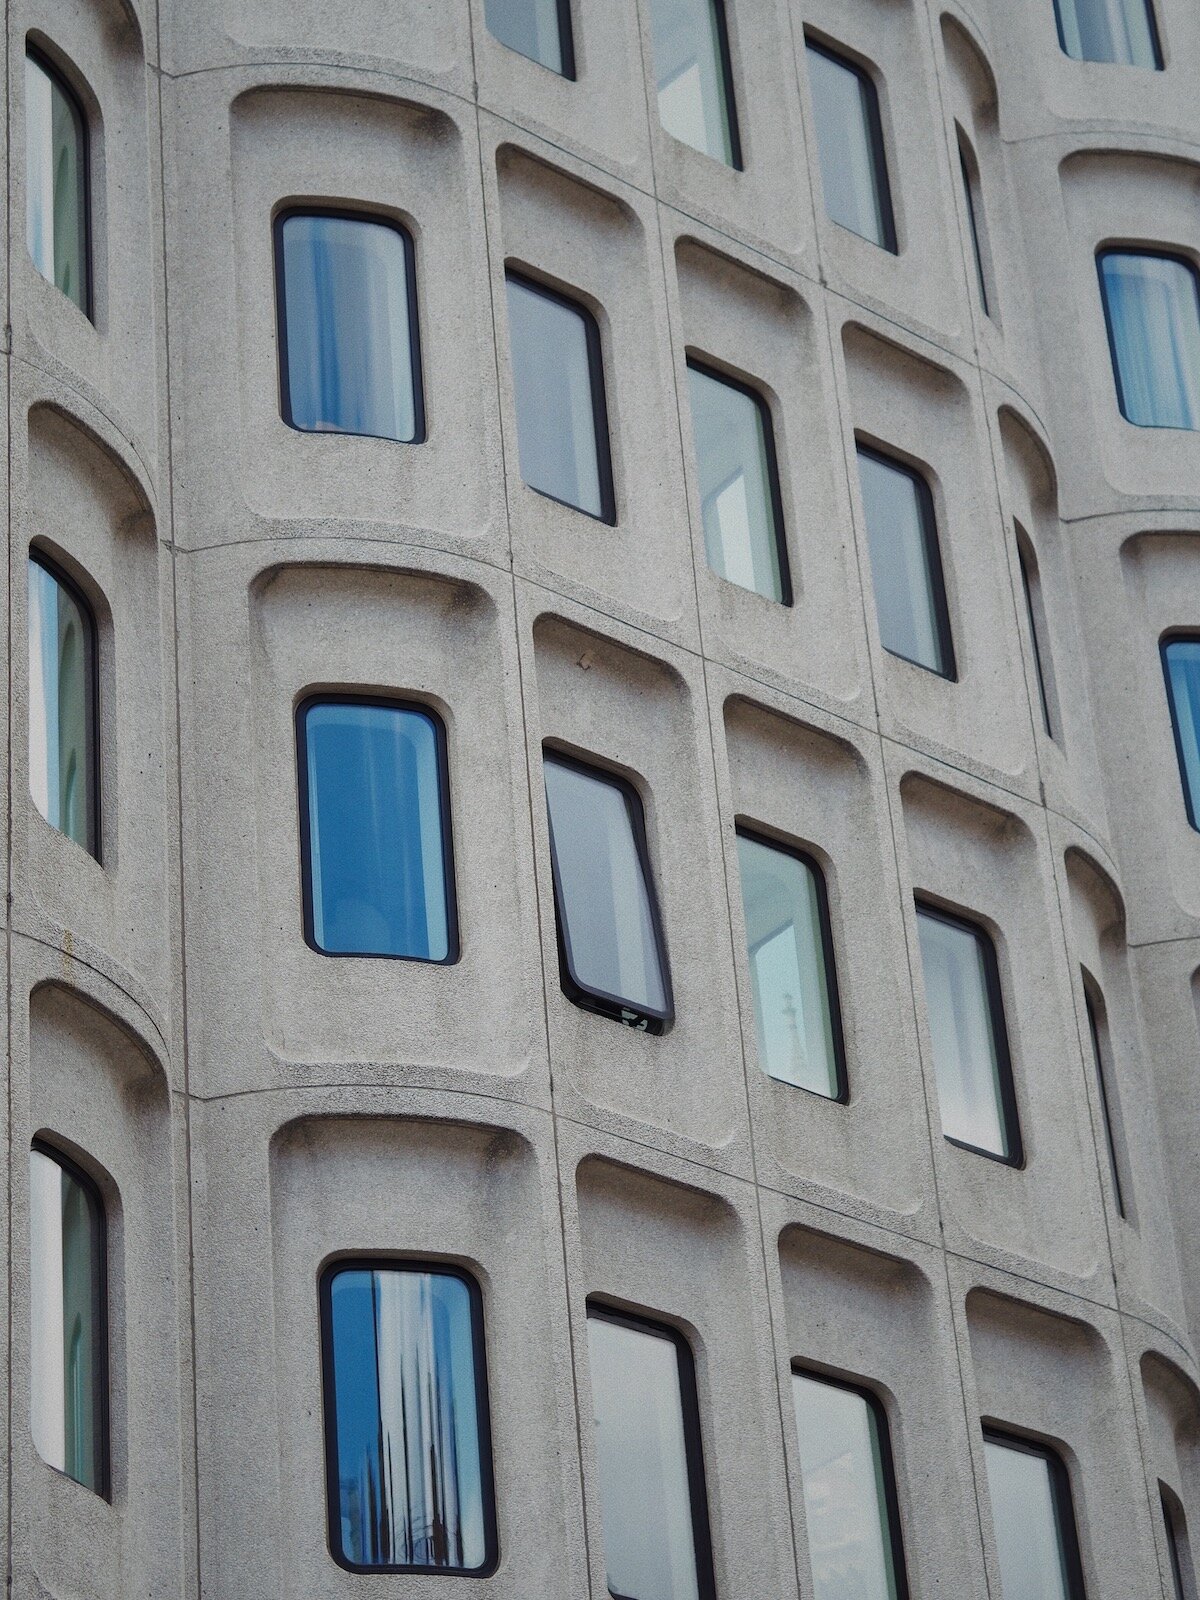 The Standard London Brutalist facade